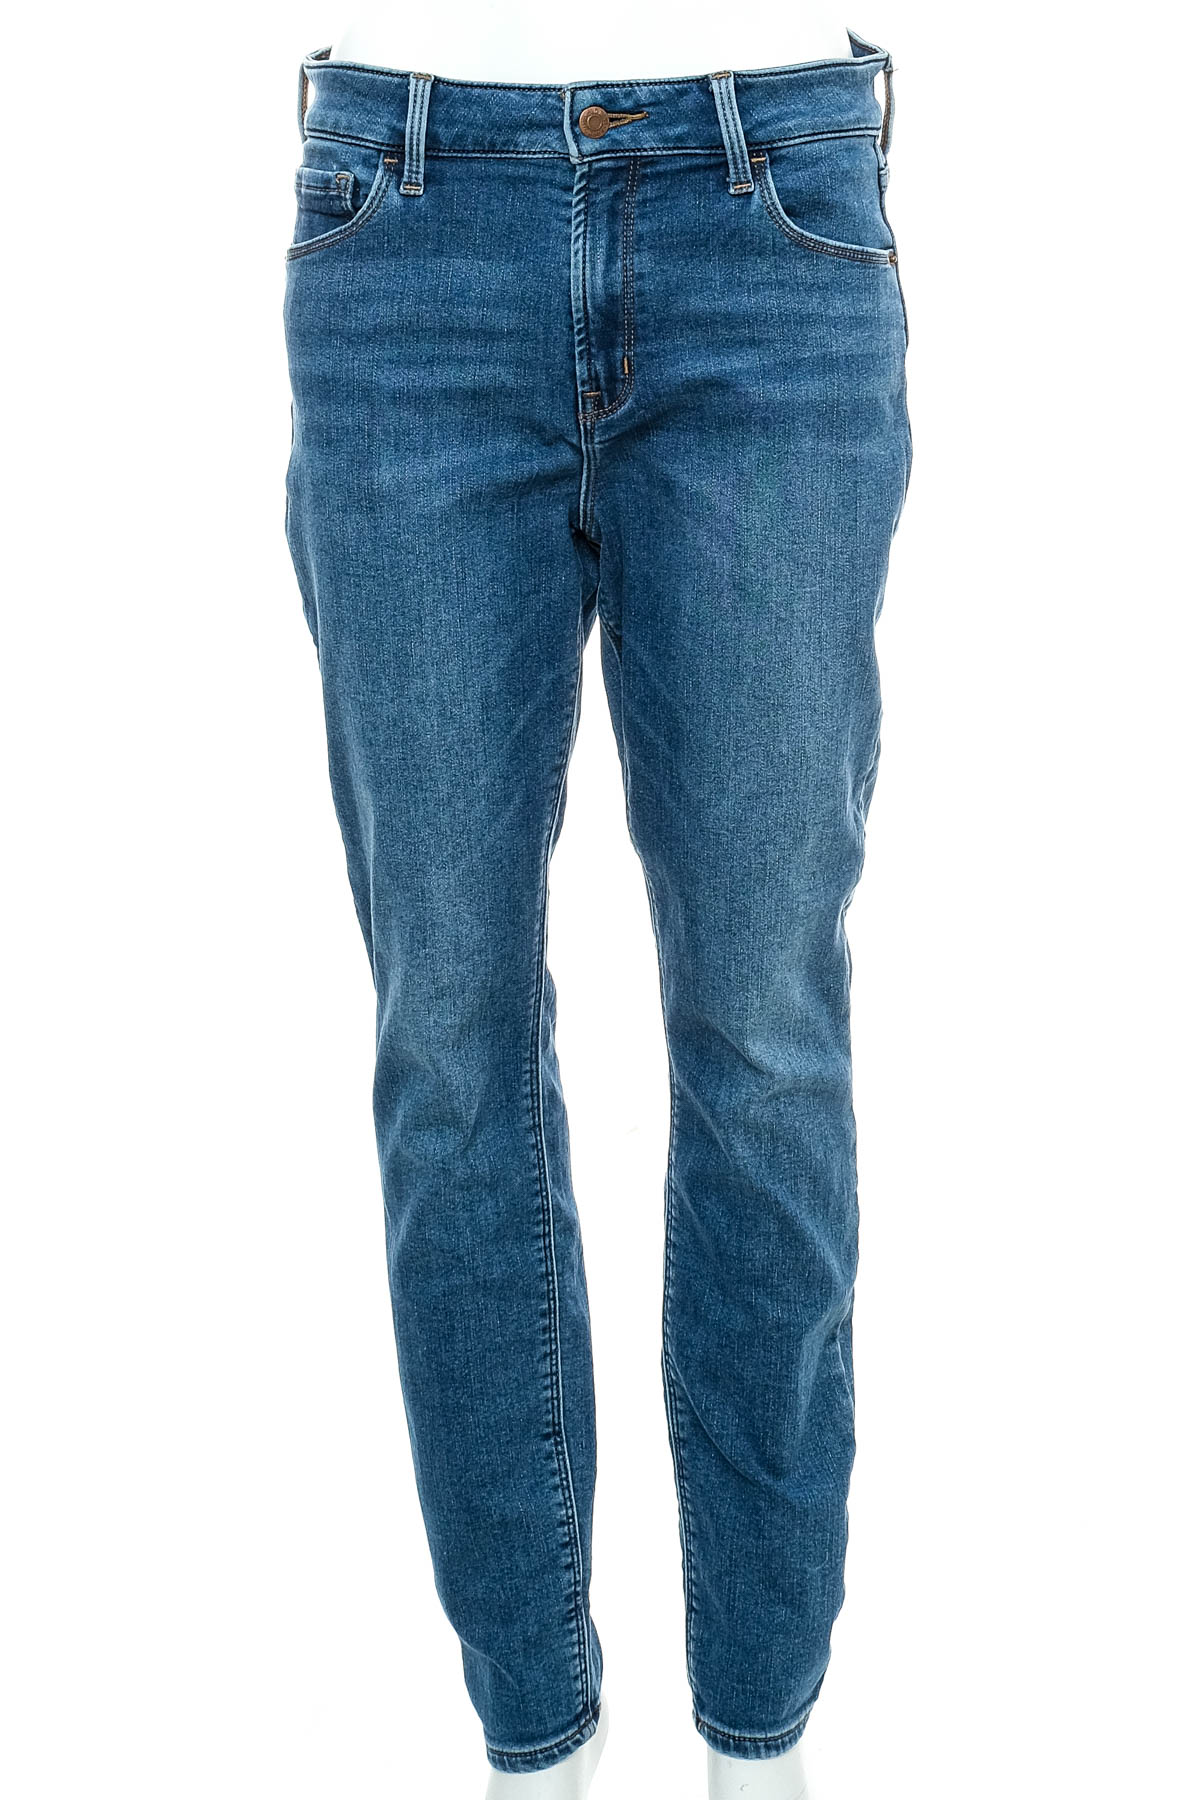 Women's jeans - OLD NAVY - 0